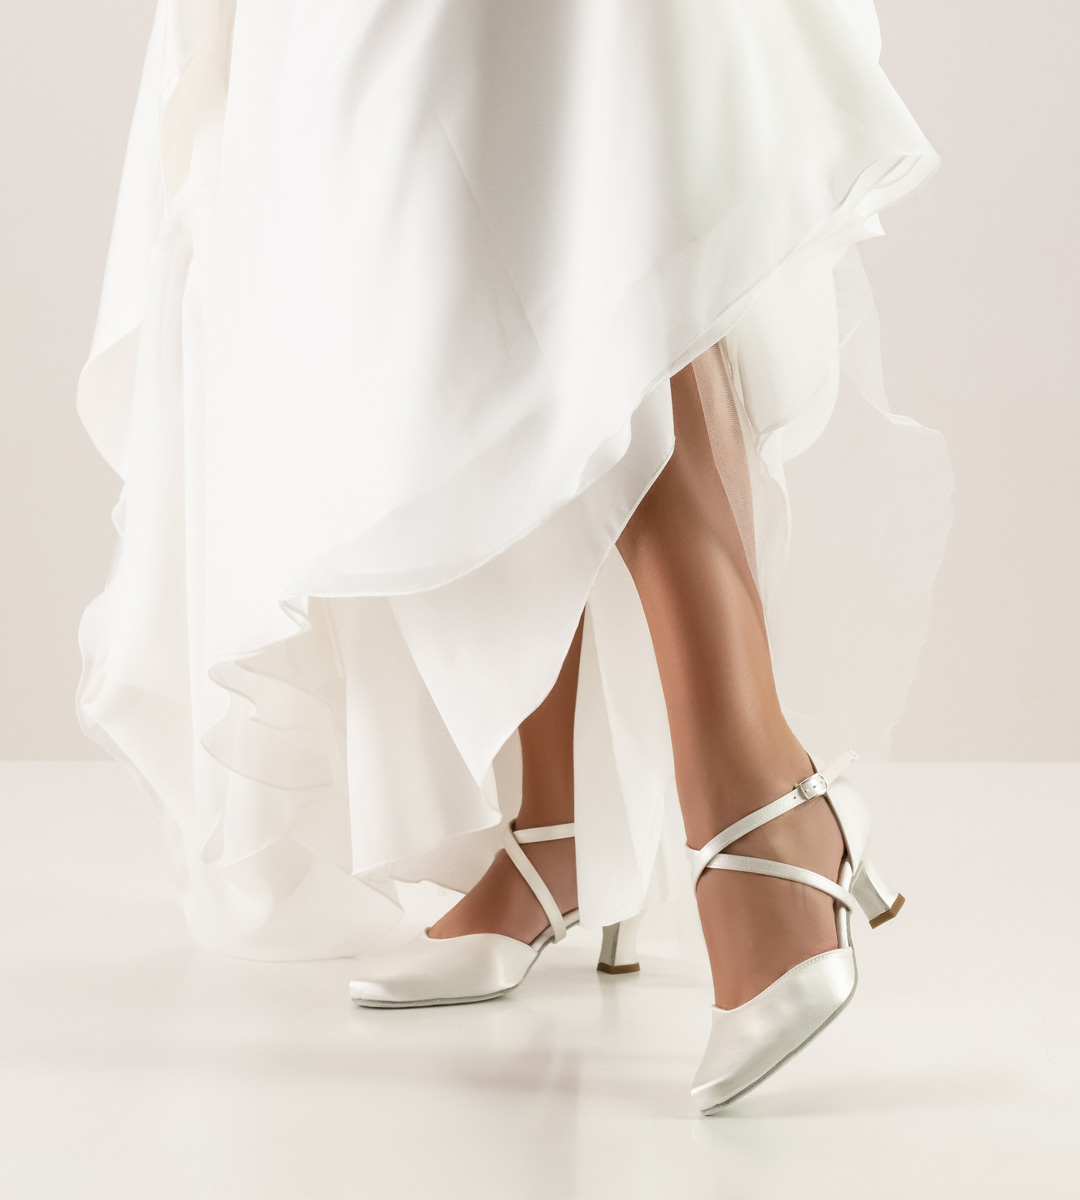 white bridal shoe by Werner Kern in satin